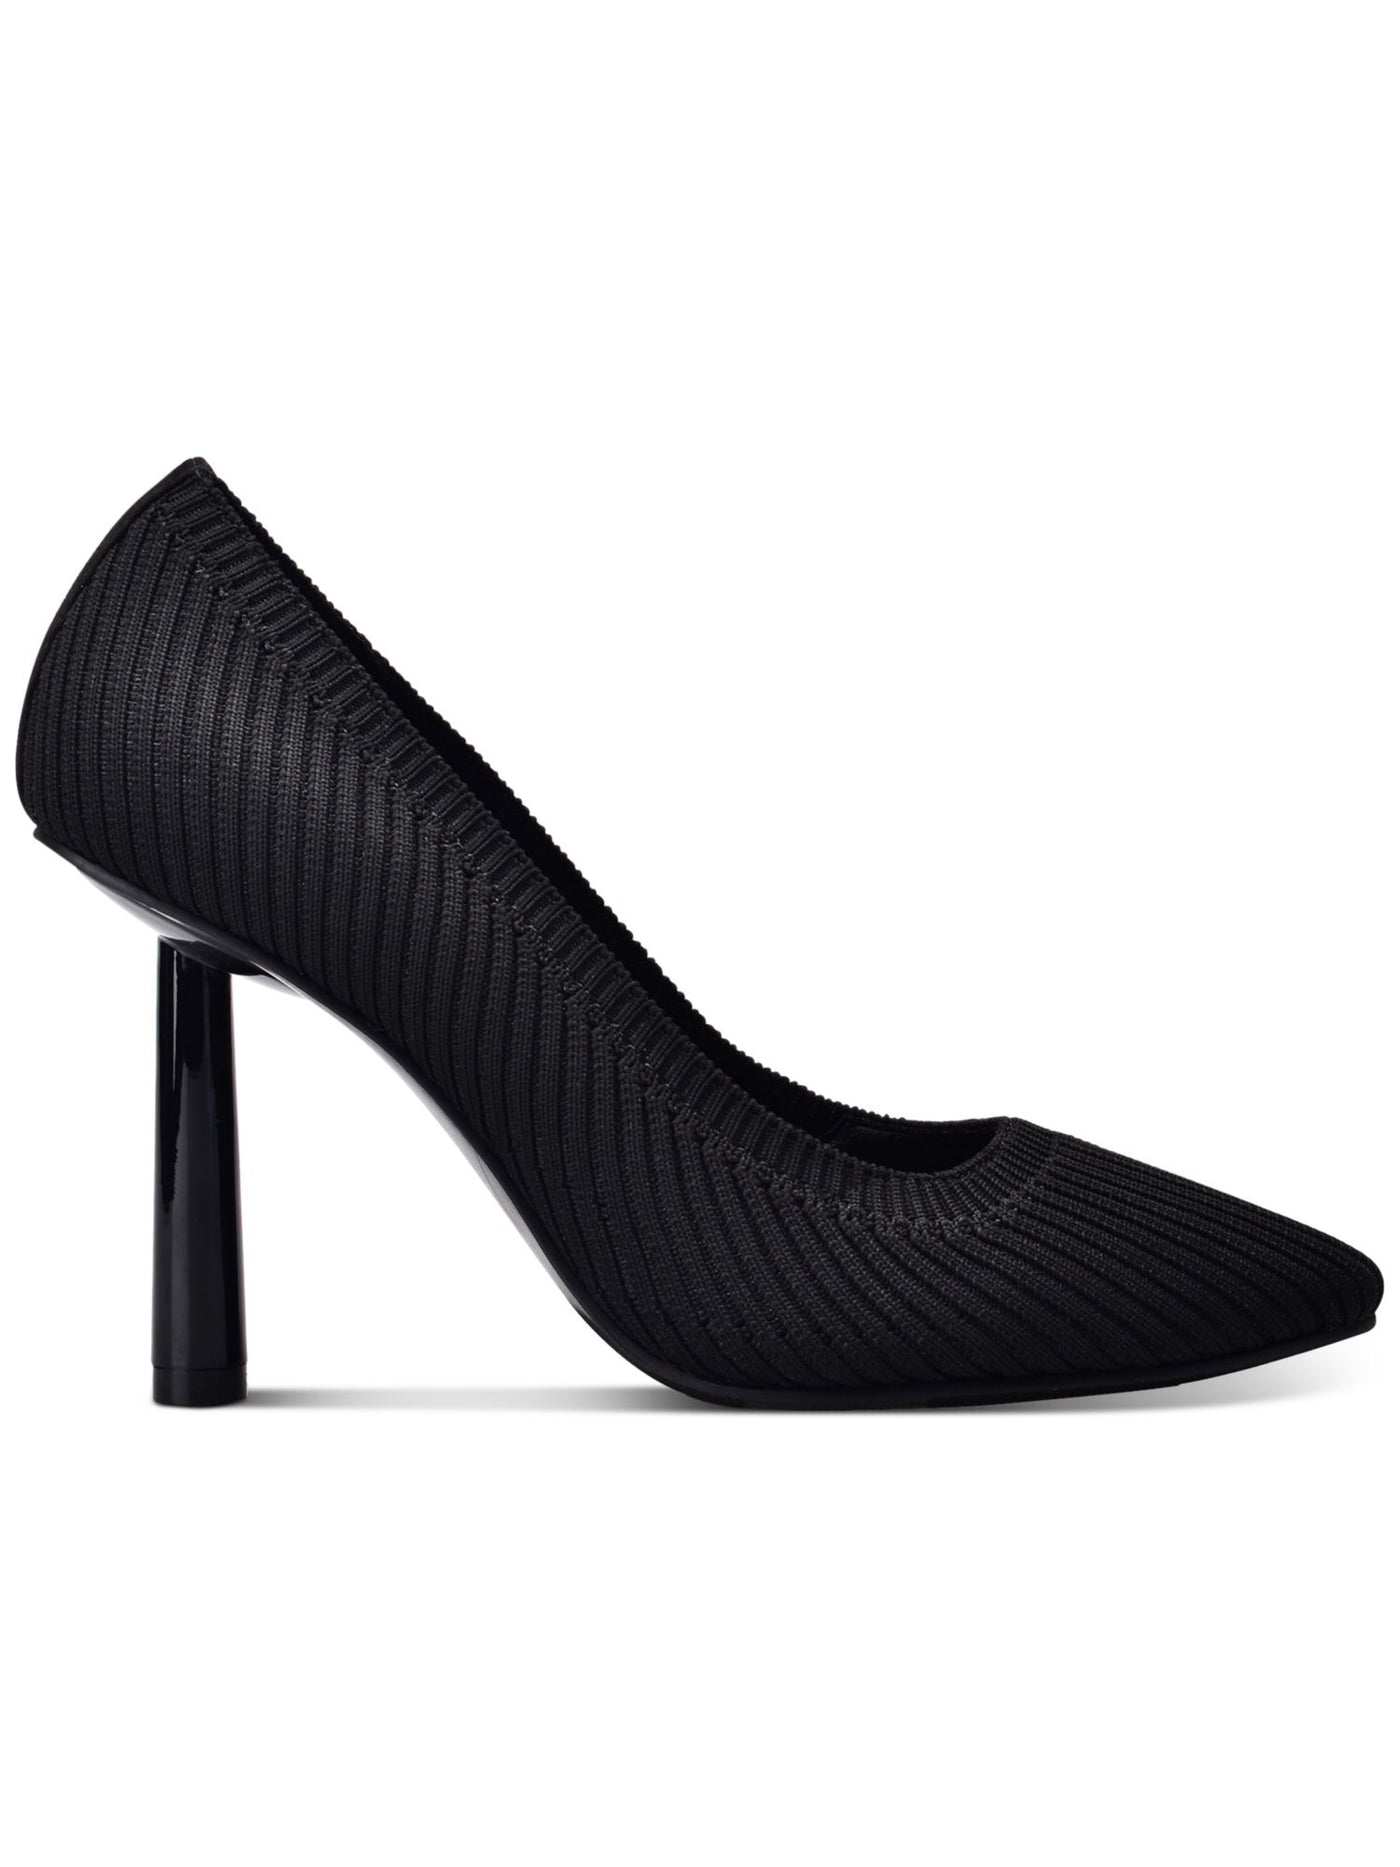 WILD PAIR Womens Black Striped Comfort Daliaa Pointed Toe Stiletto Slip On Dress Pumps Shoes 7.5 M